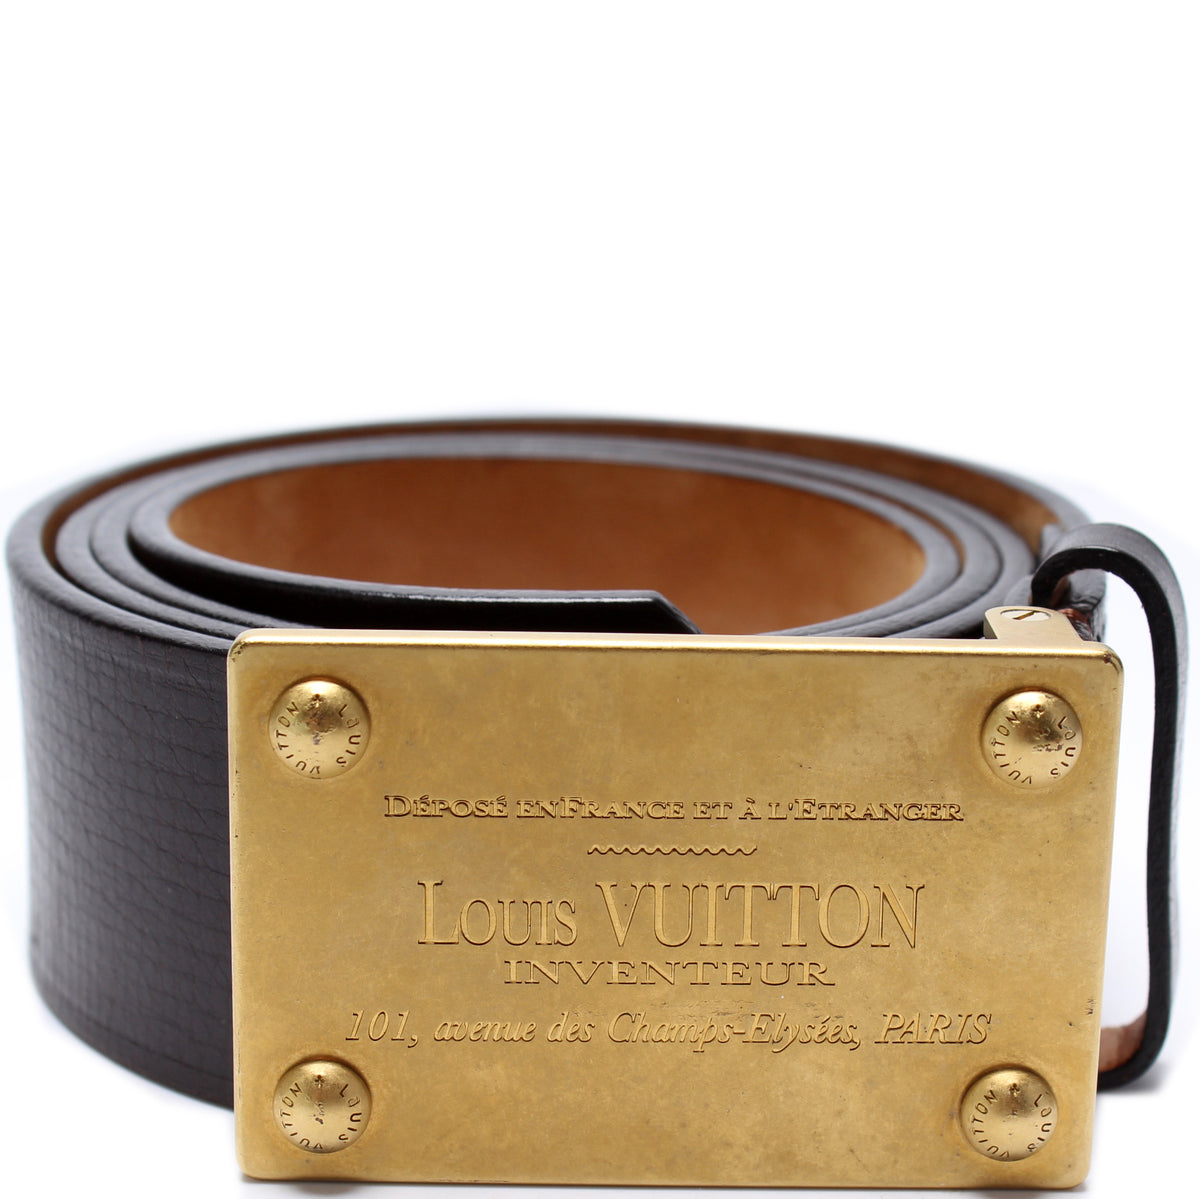 LV Inventeur Leather Belt Size 85/34